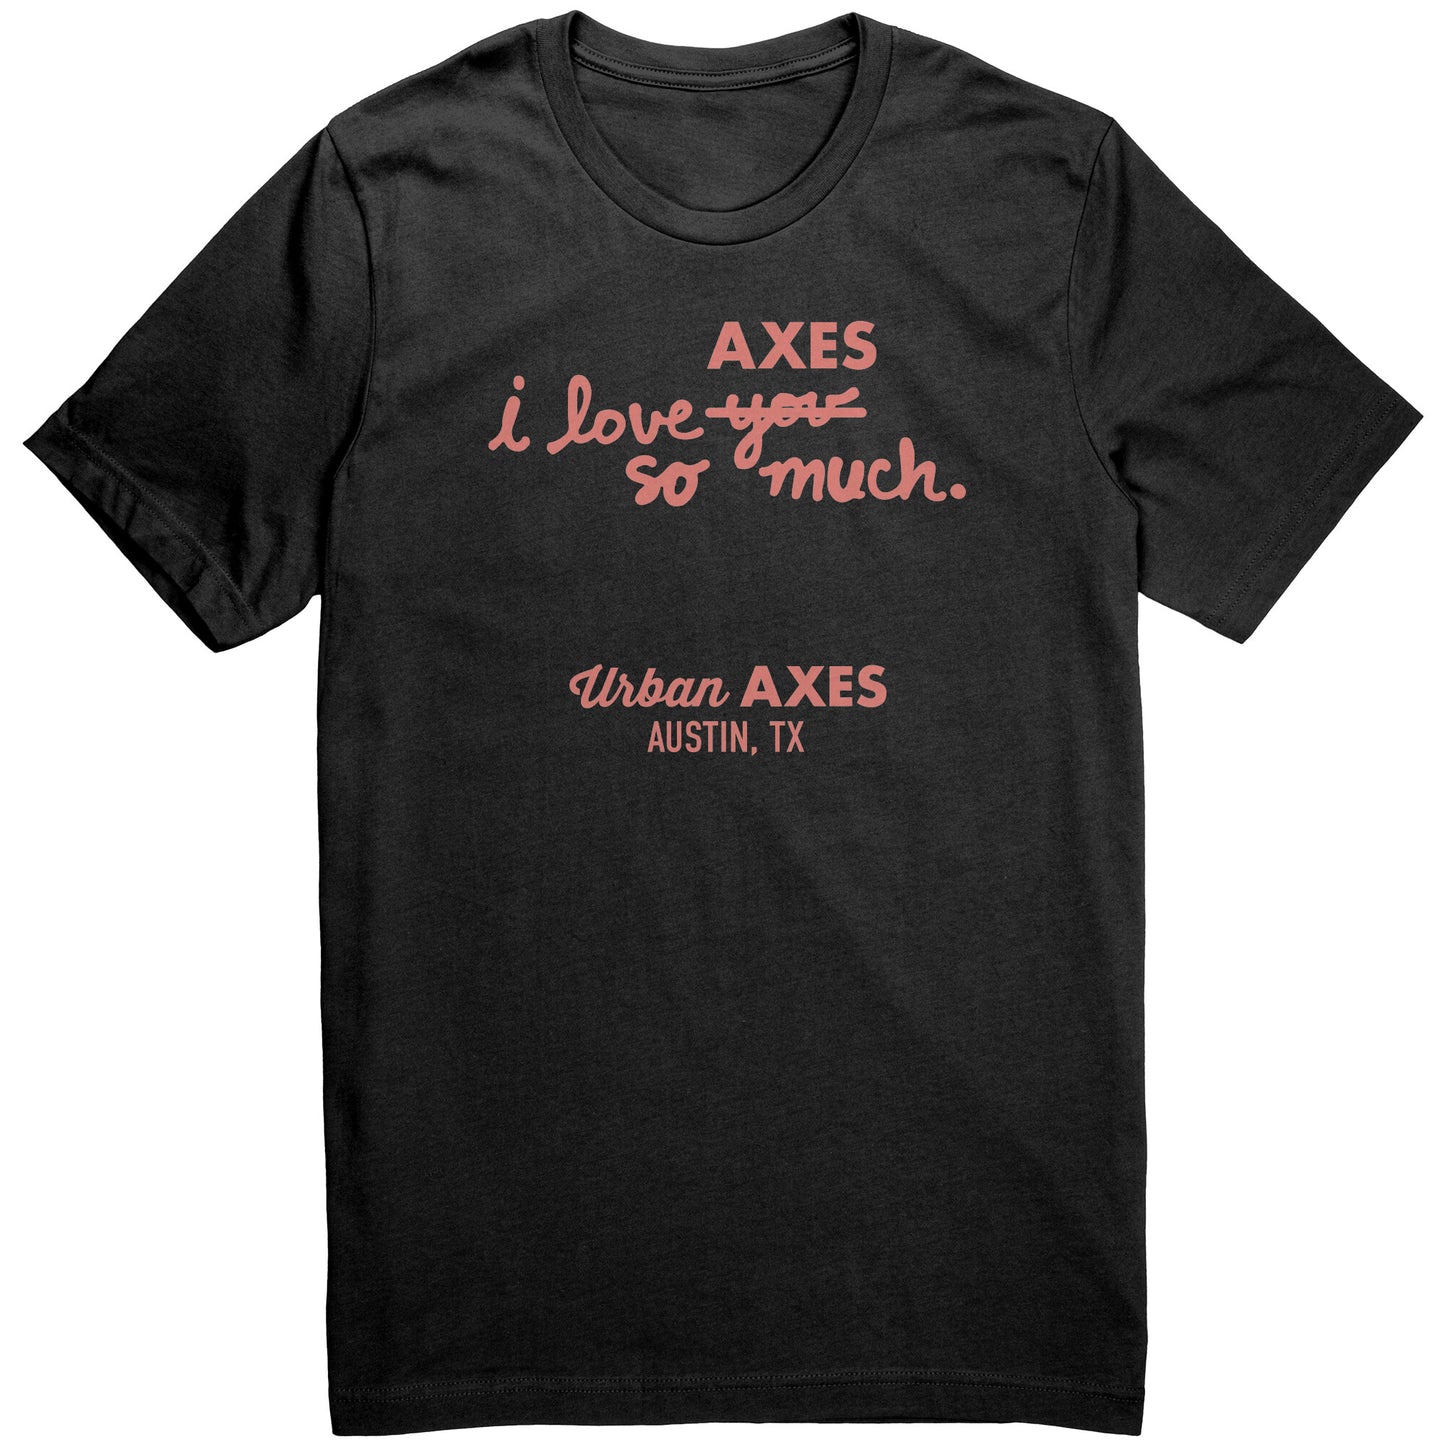 Austin I Heart Axes SO Much - Canvas Unisex Shirt